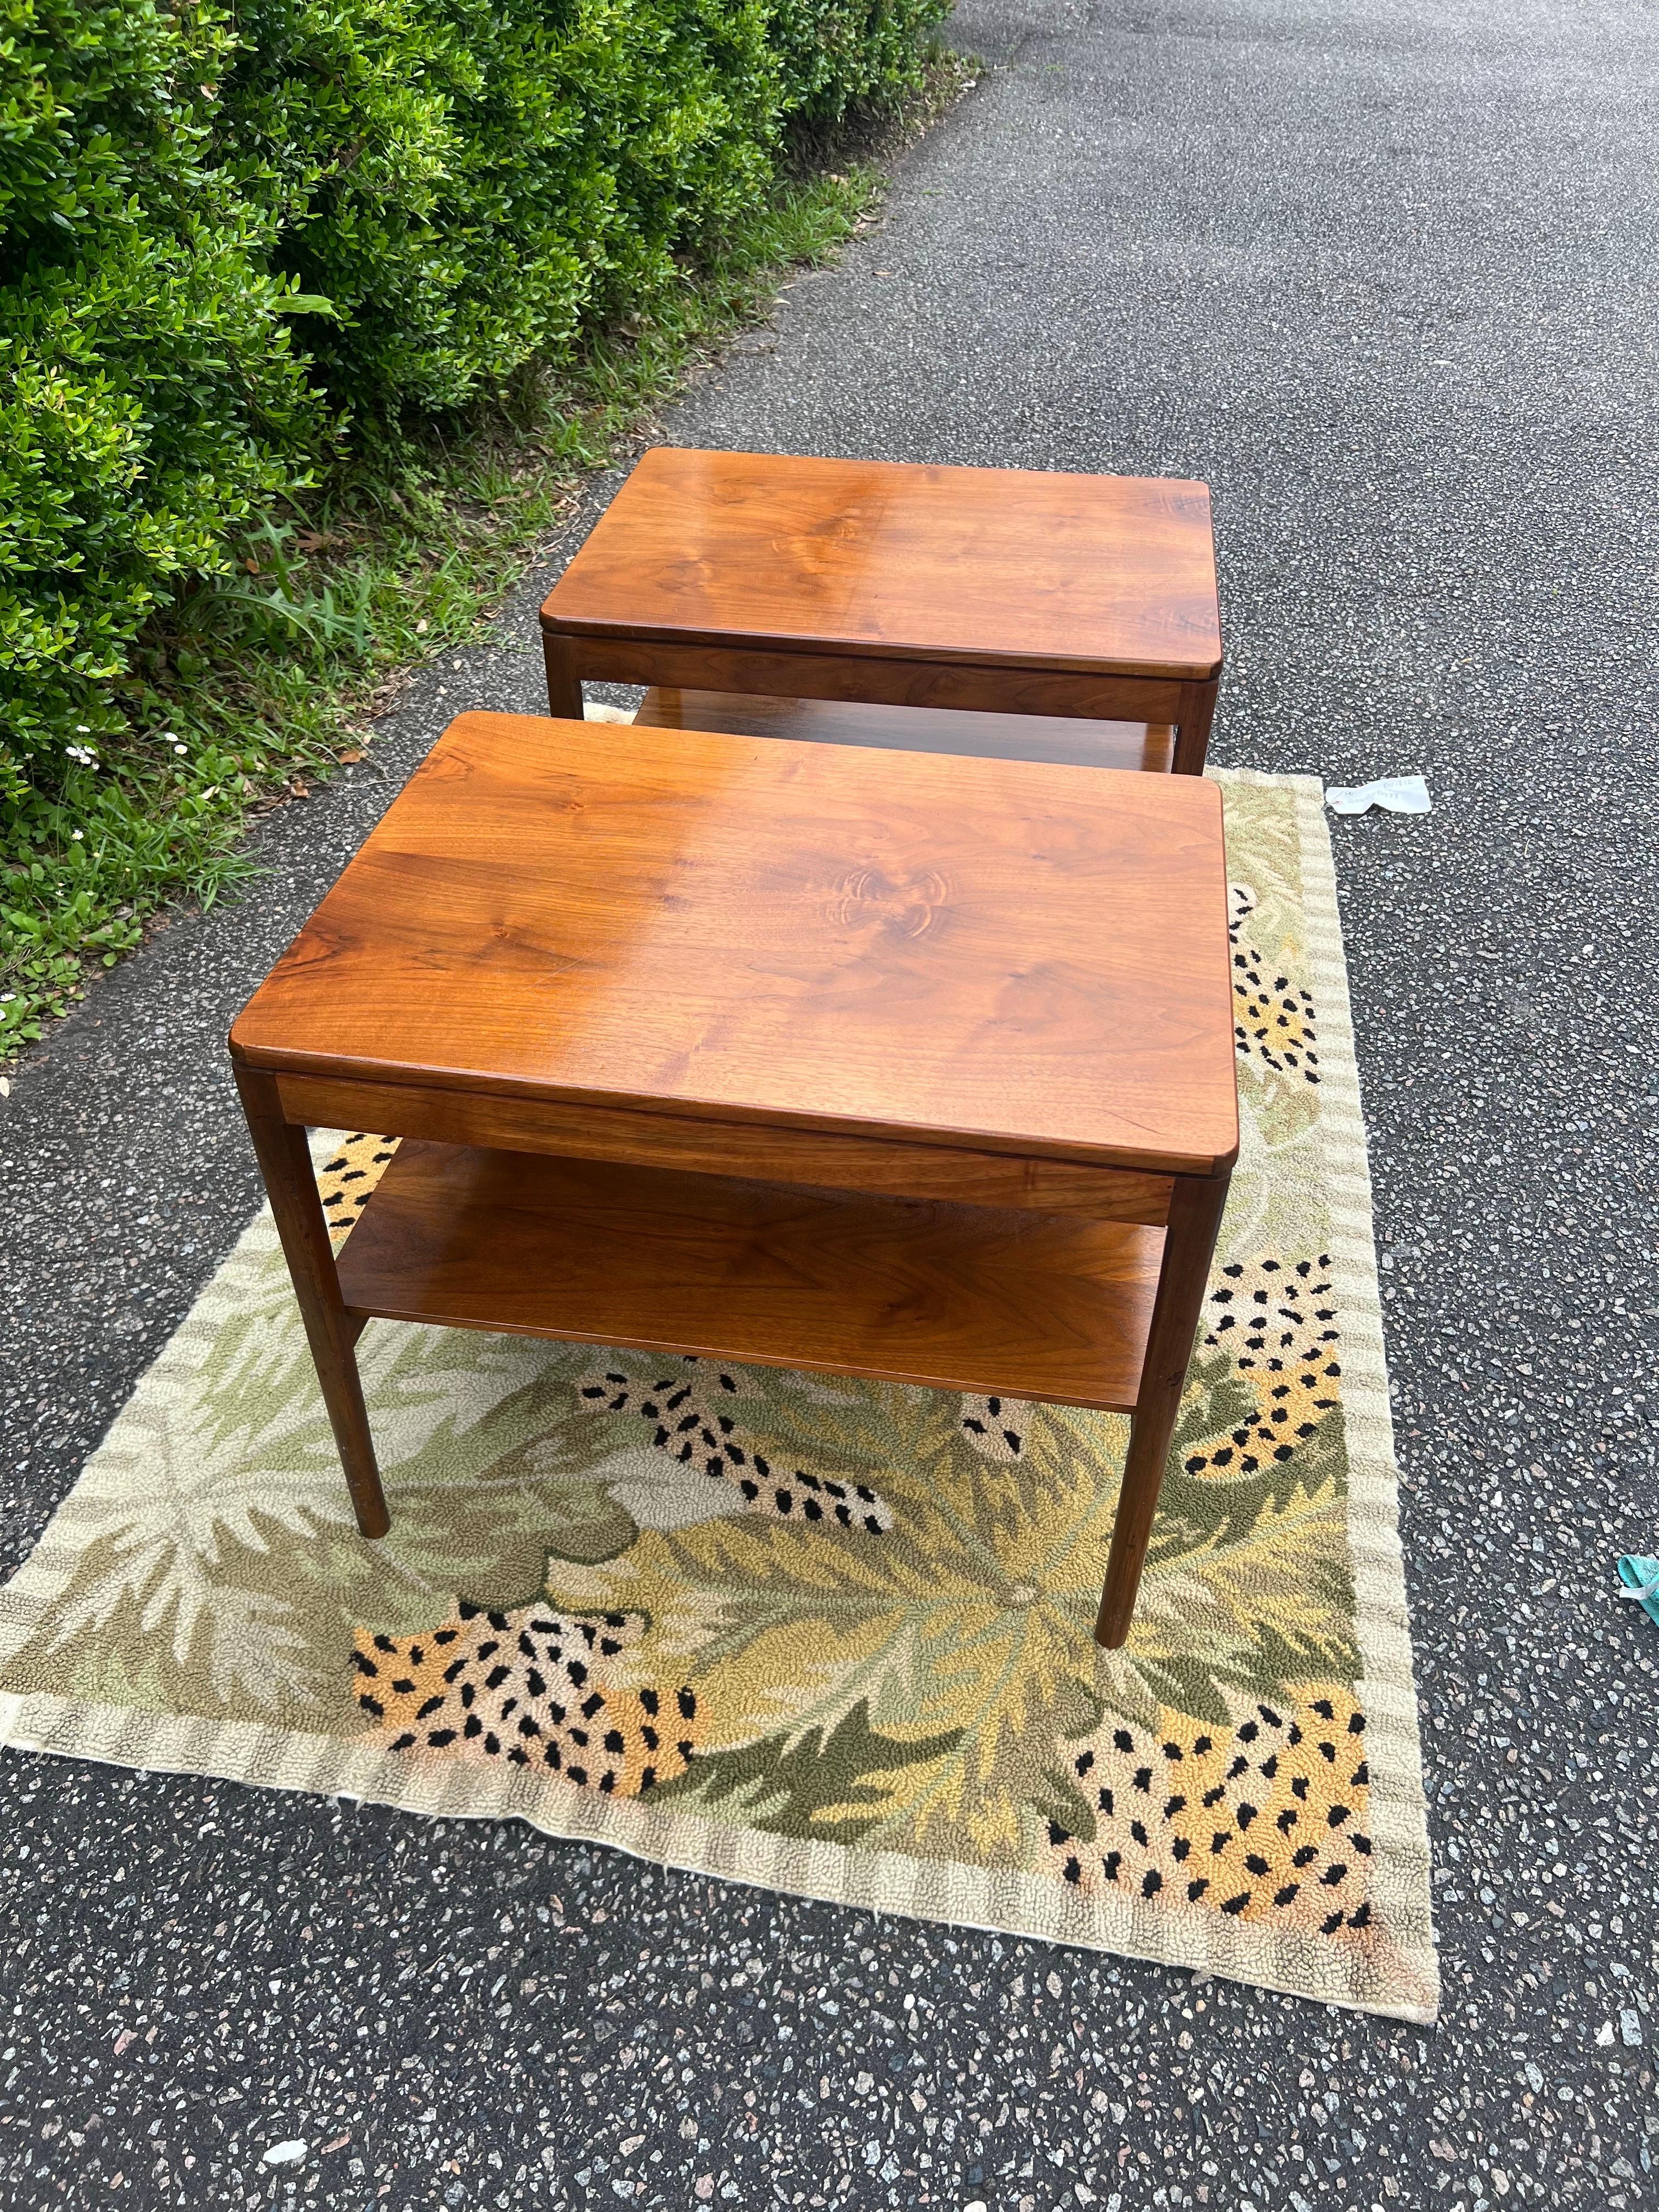 High Quality Mid Century Modern Two-Tier Walnut Wood Side Table with lower Shelf, Designed by Kipp Stewart for Drexel